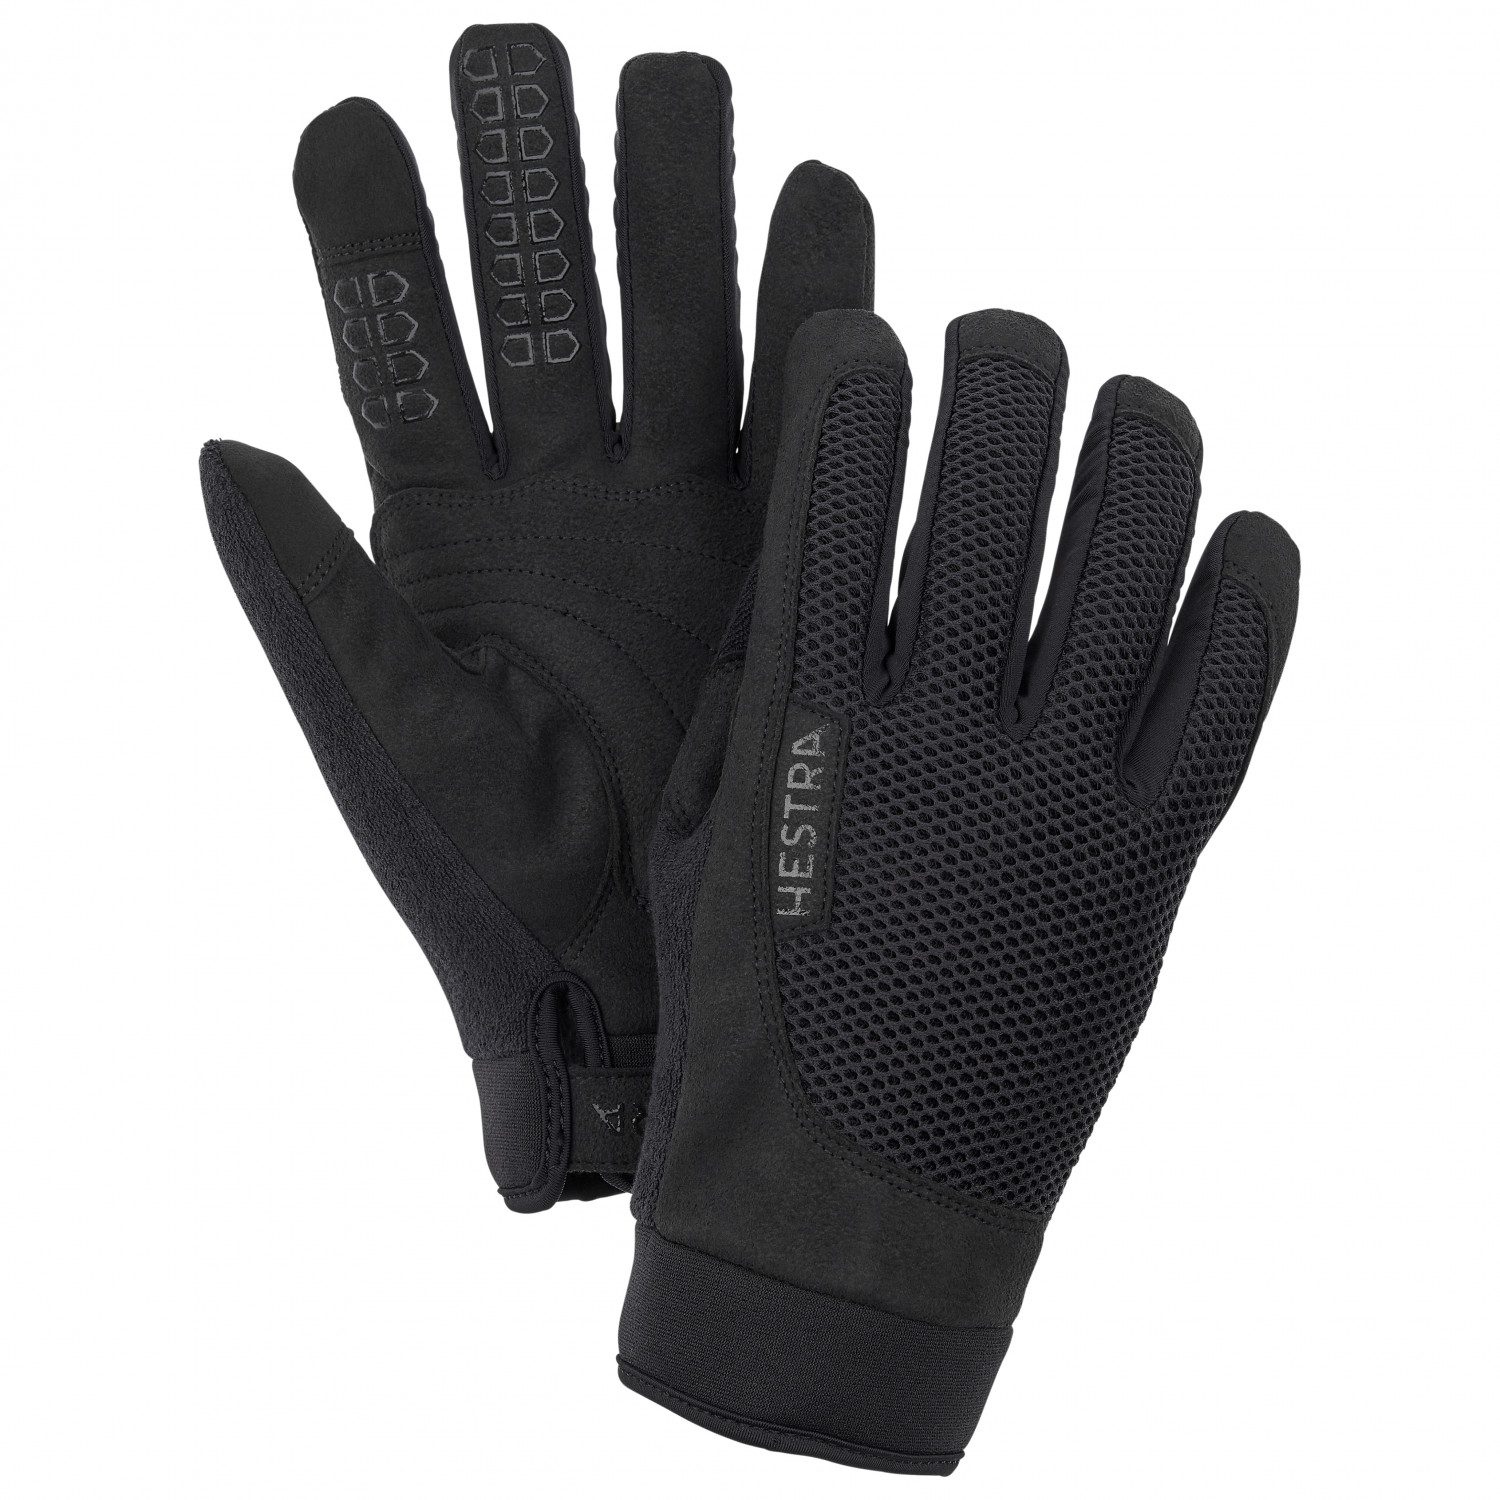 Перчатки Hestra Bike Long Sr 5 Finger, цвет Black/Black перчатки ссм перчатки для бенди bg ccm 8k sr bk